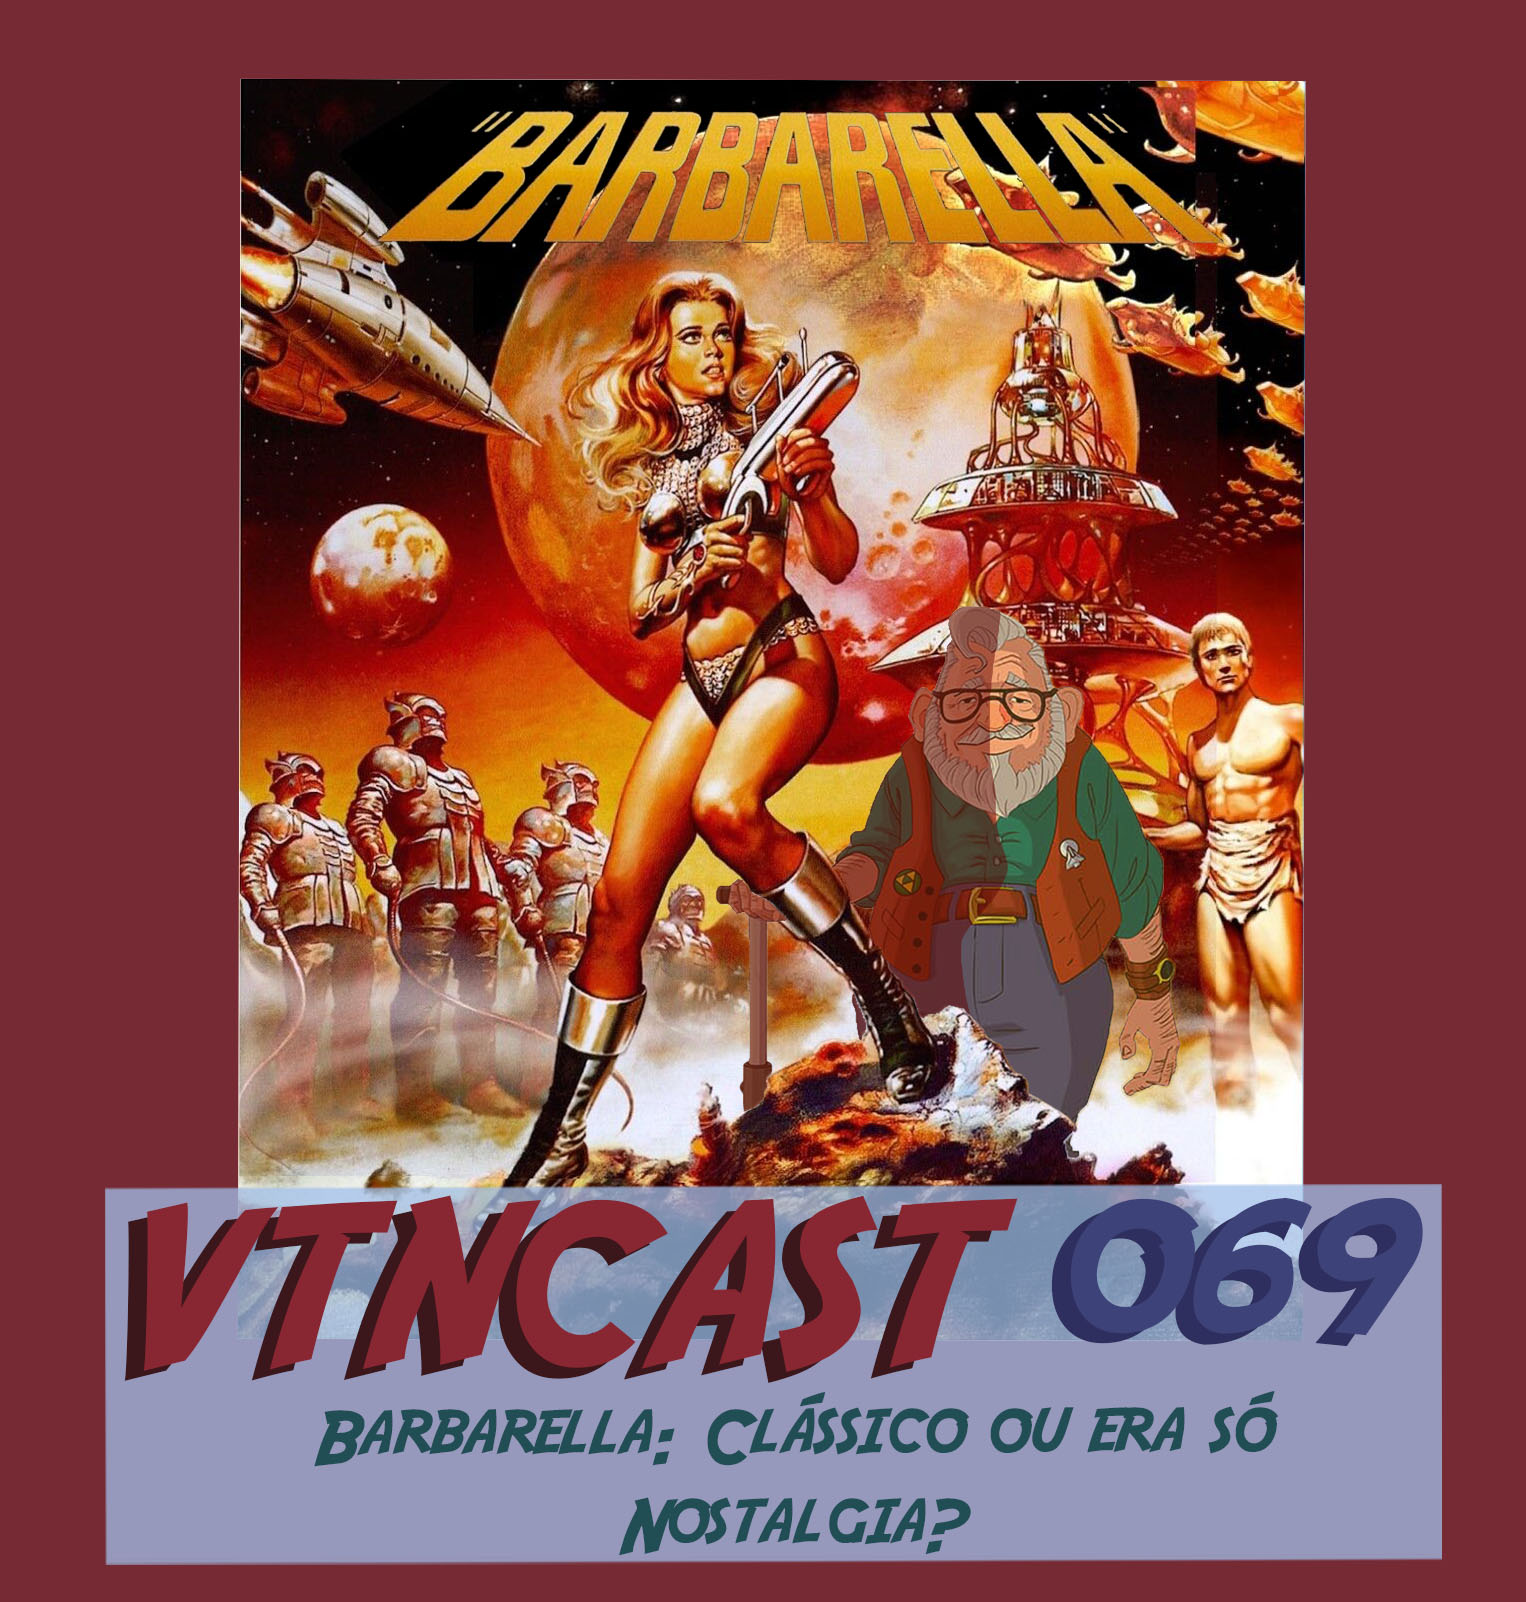 VTNCast 069 – Barbarella: Clássico ou era só nostalgia? post thumbnail image